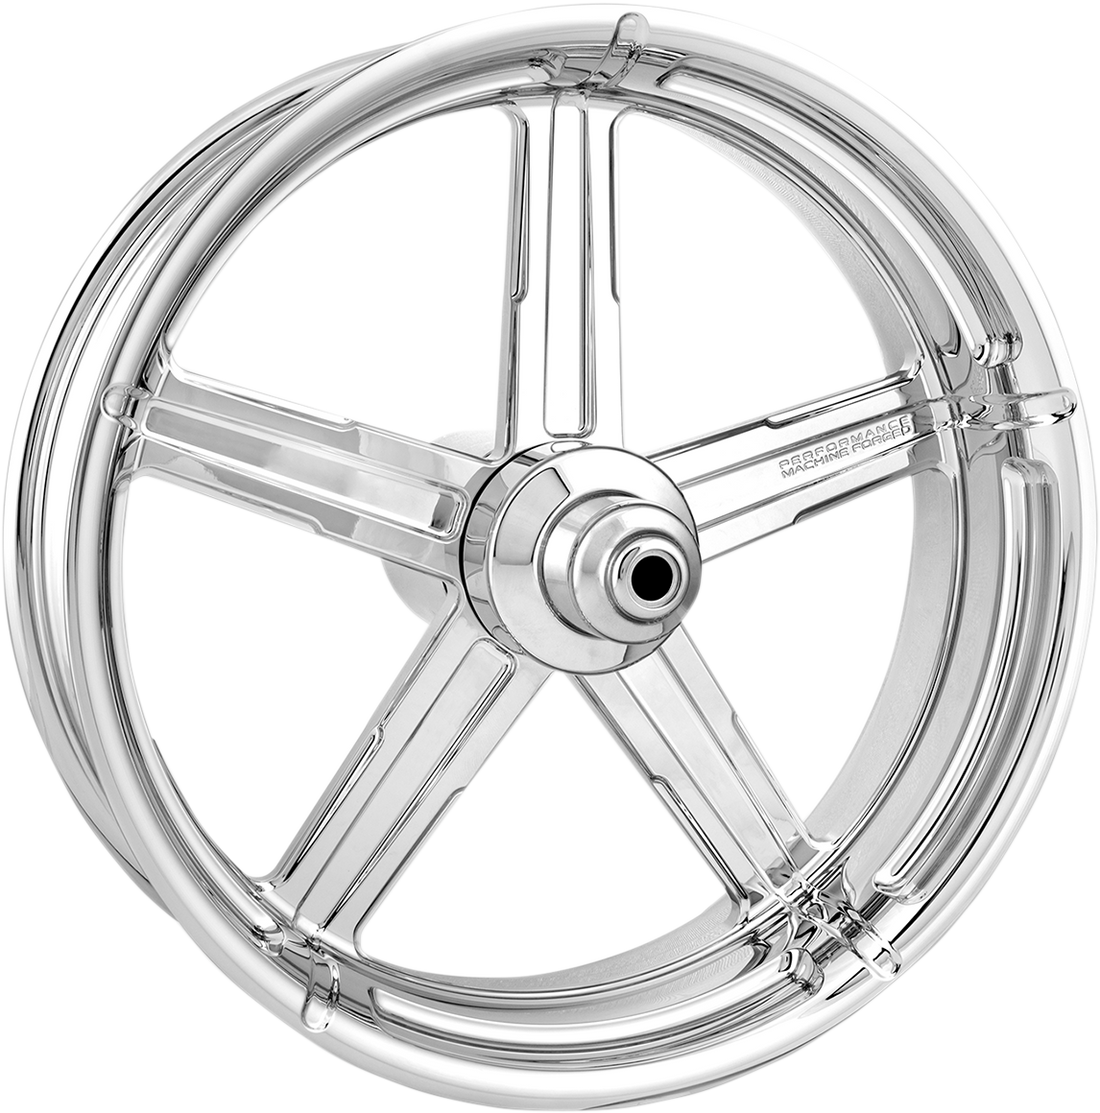 0201-2425 - PERFORMANCE MACHINE (PM) Wheel - Formula - Dual Disc/ABS - Front - Chrome - 21"x3.50" 15207106RFMJCH